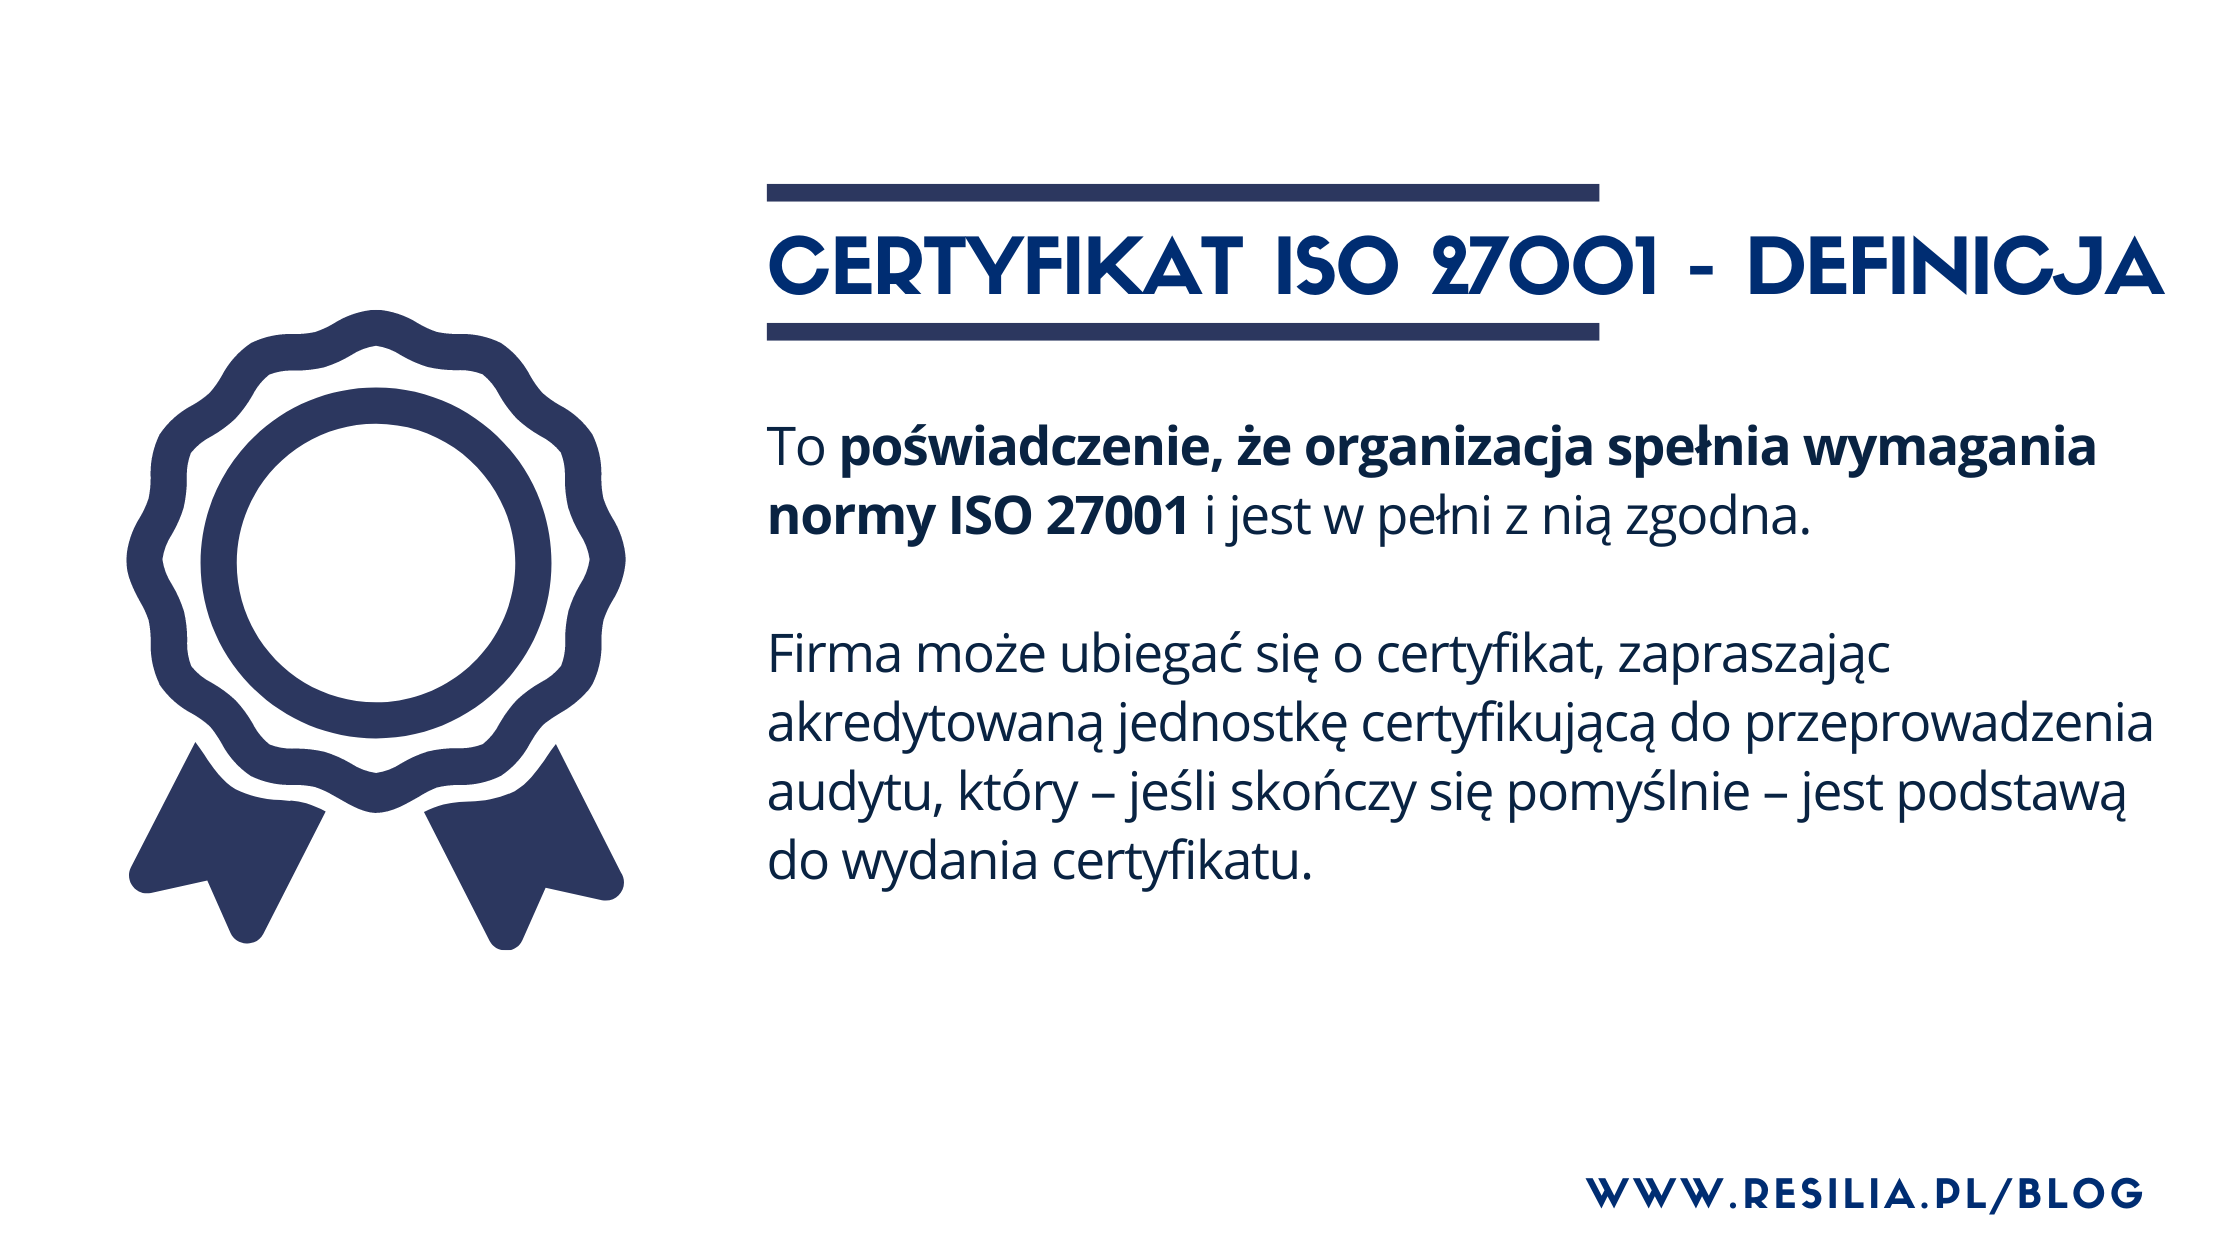 Certyfikat ISO 27001 definicja